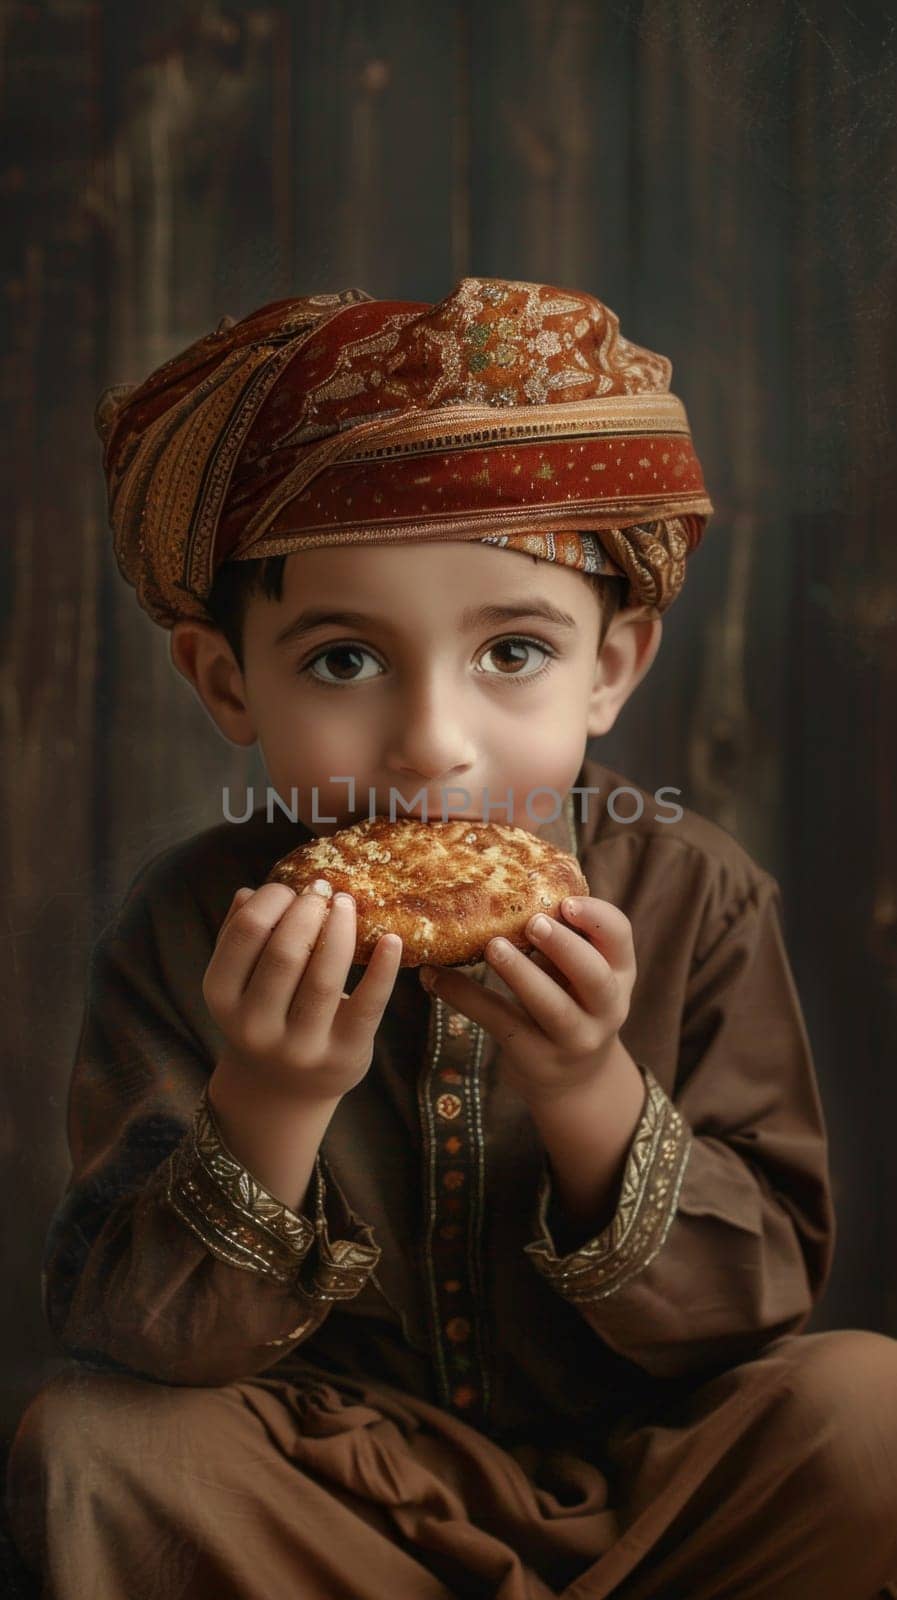 Portrait of muslim boy enjoying some food by papatonic